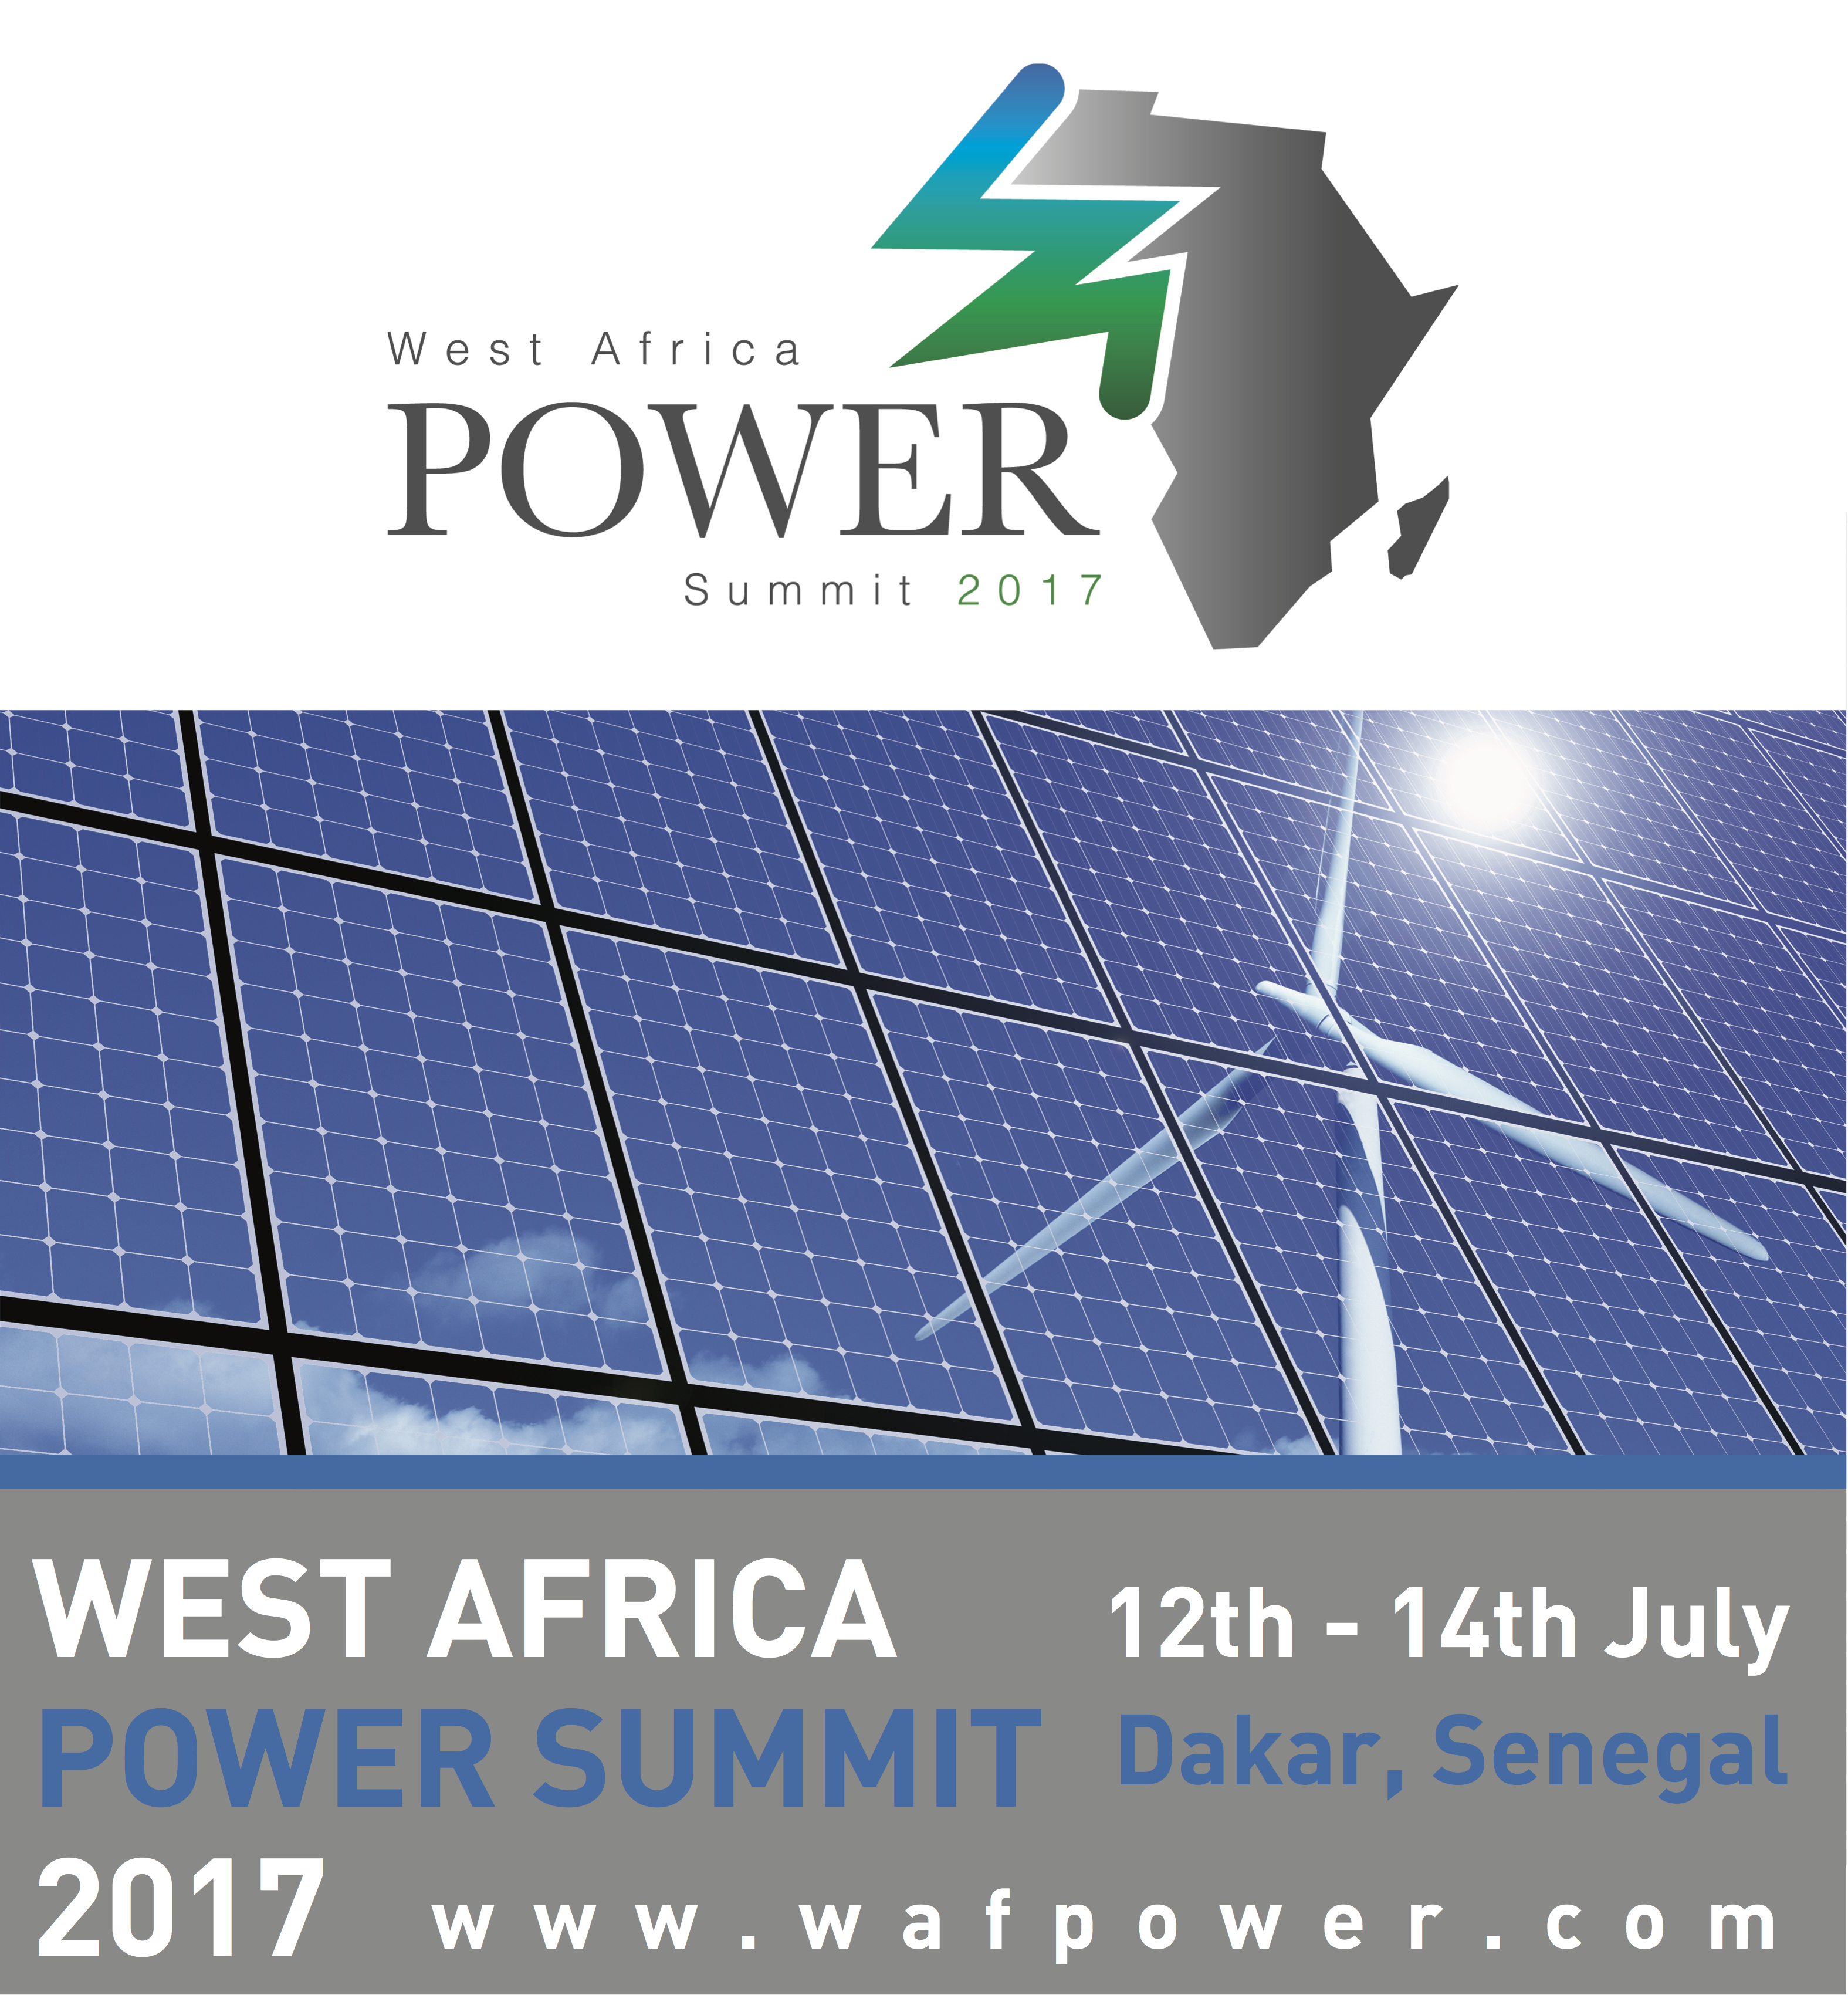 West Africa Power Summit 2017, 12th to the 14th July, Dakar, Senegal